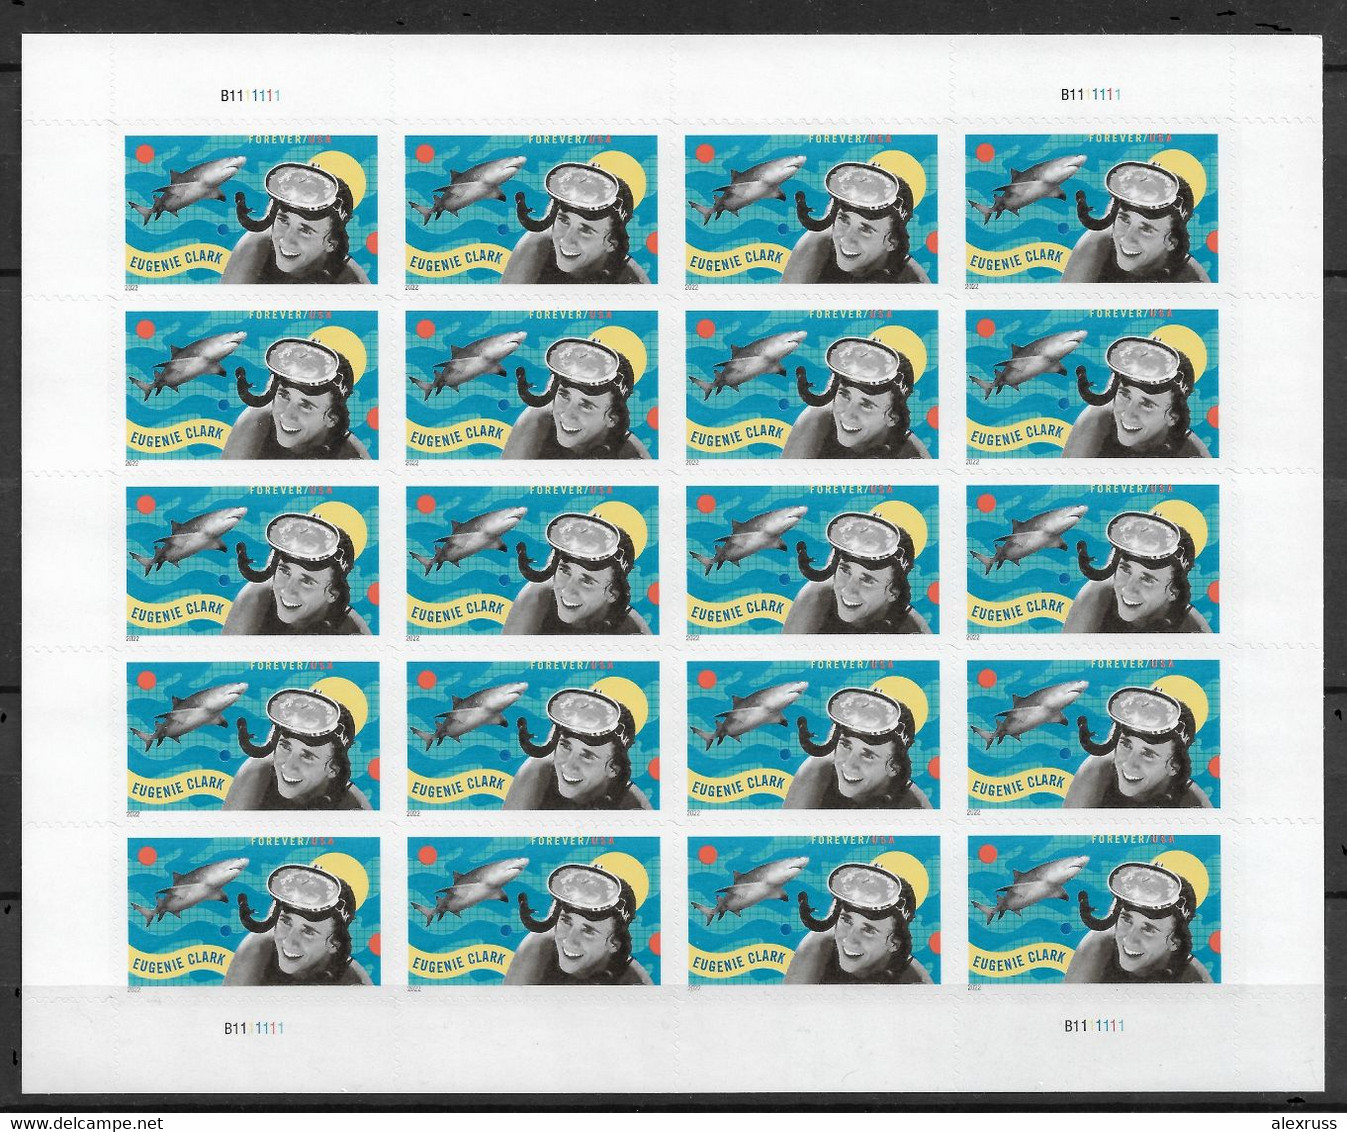 US 2022 Eugenie Clark "Shark Lady" Sheet Of 20 Forever Stamps, Scott # 5693,Special Micro Printing+, VF MNH** - Ganze Bögen